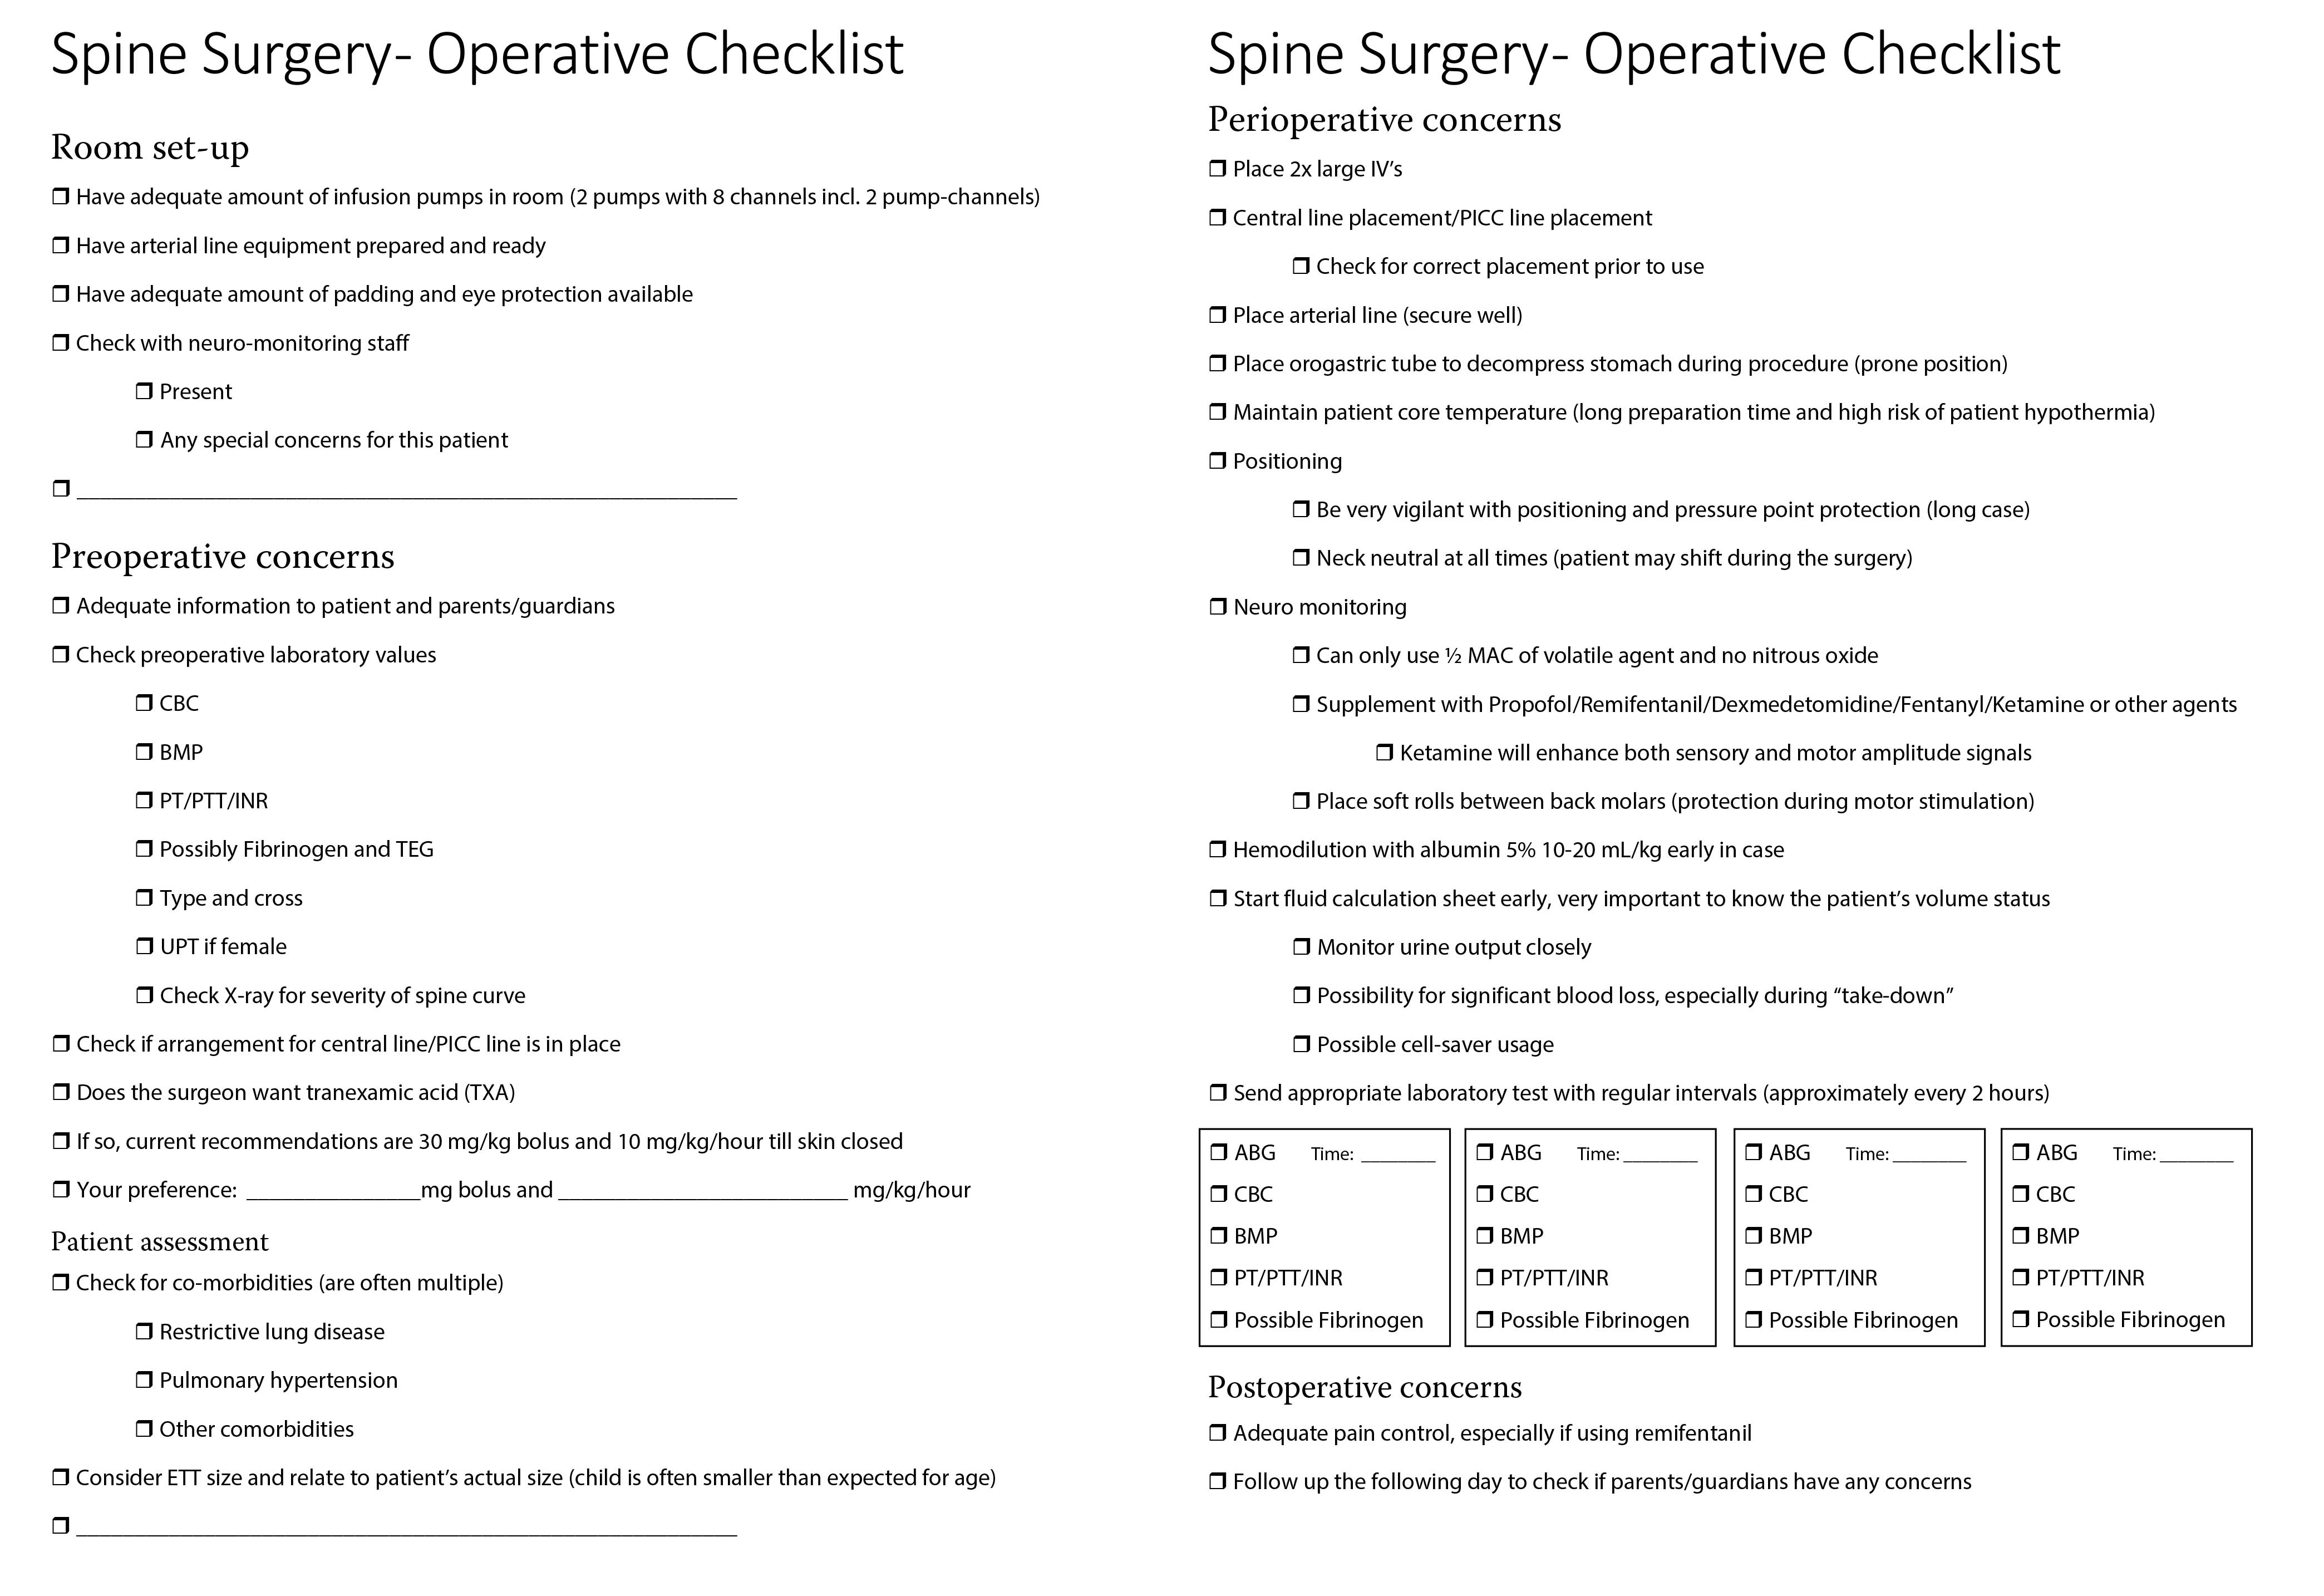 Spine Surgery - Operative Checklist